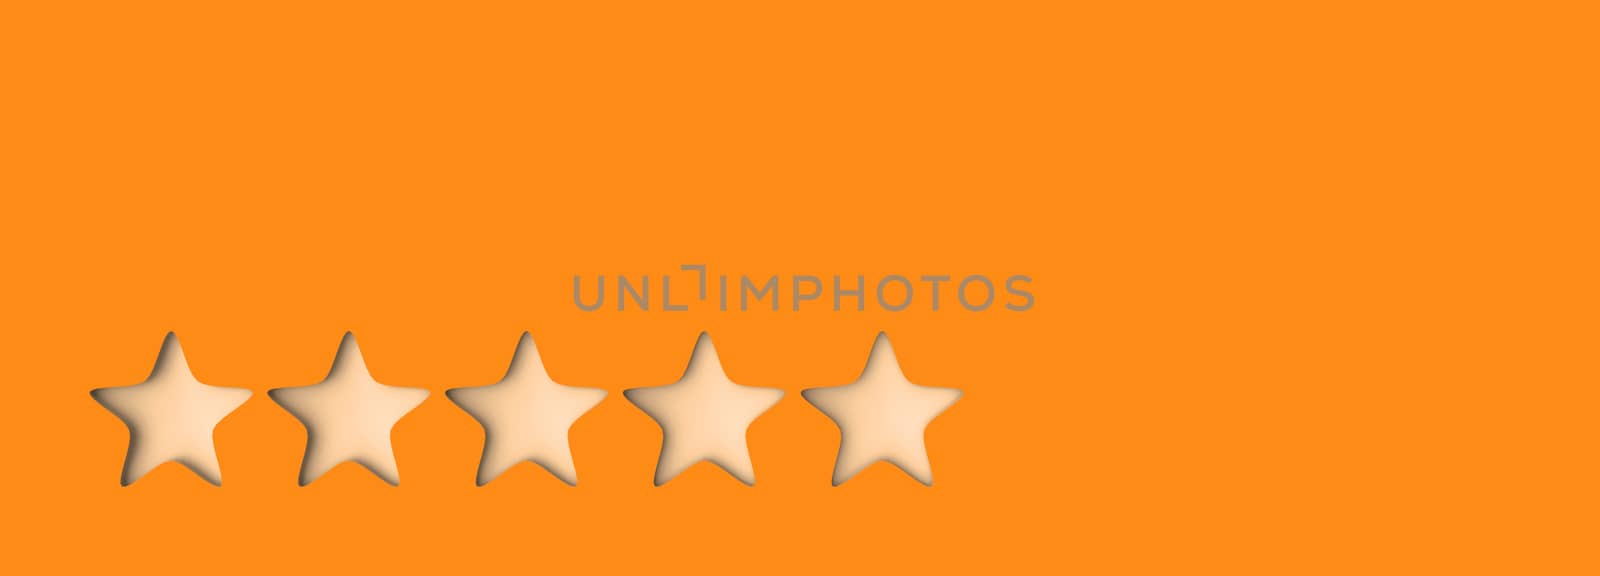 3d five orange star on color background. Render and illustration of golden star for premium review by Andreajk3